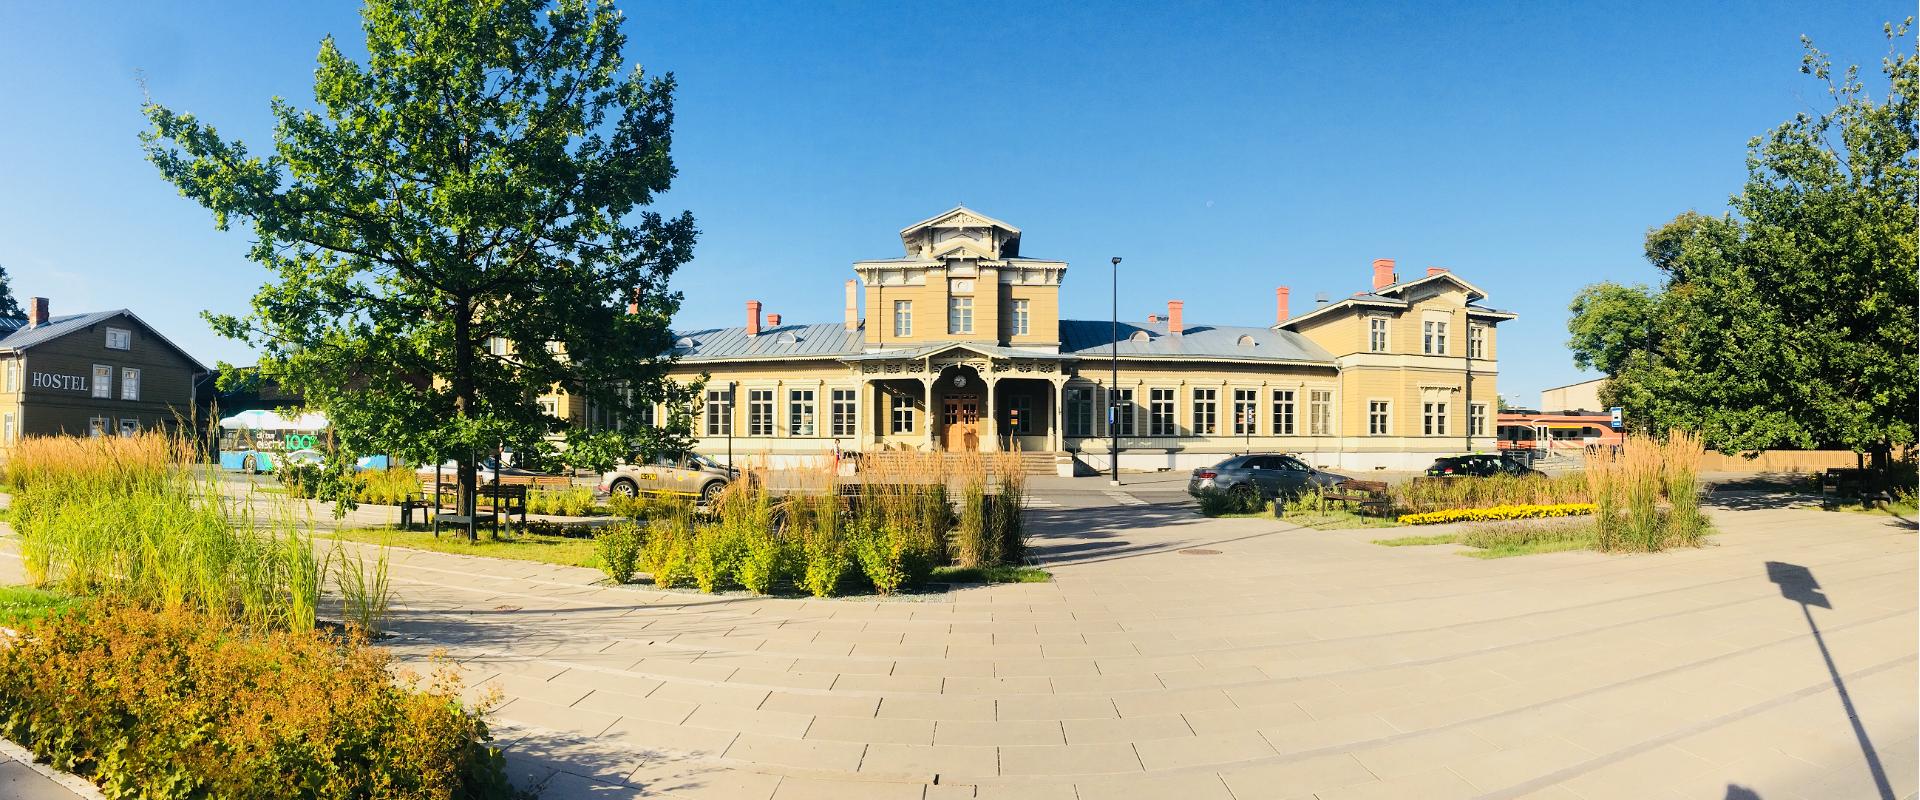 Tartu Railway Station on a sunny day